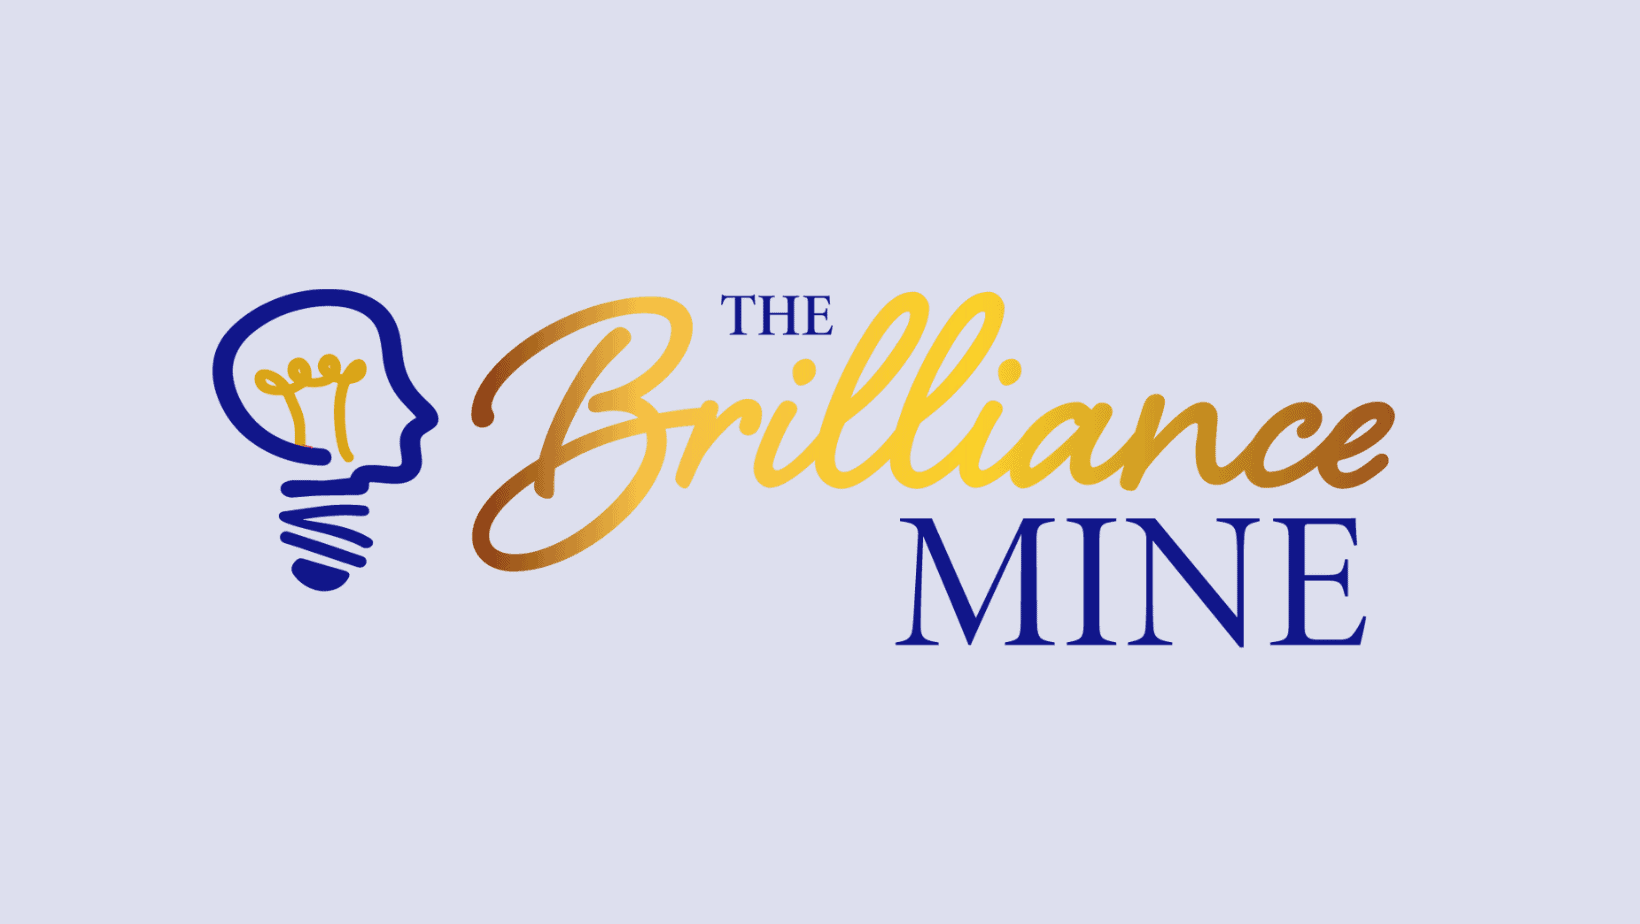 The Brilliance Mine